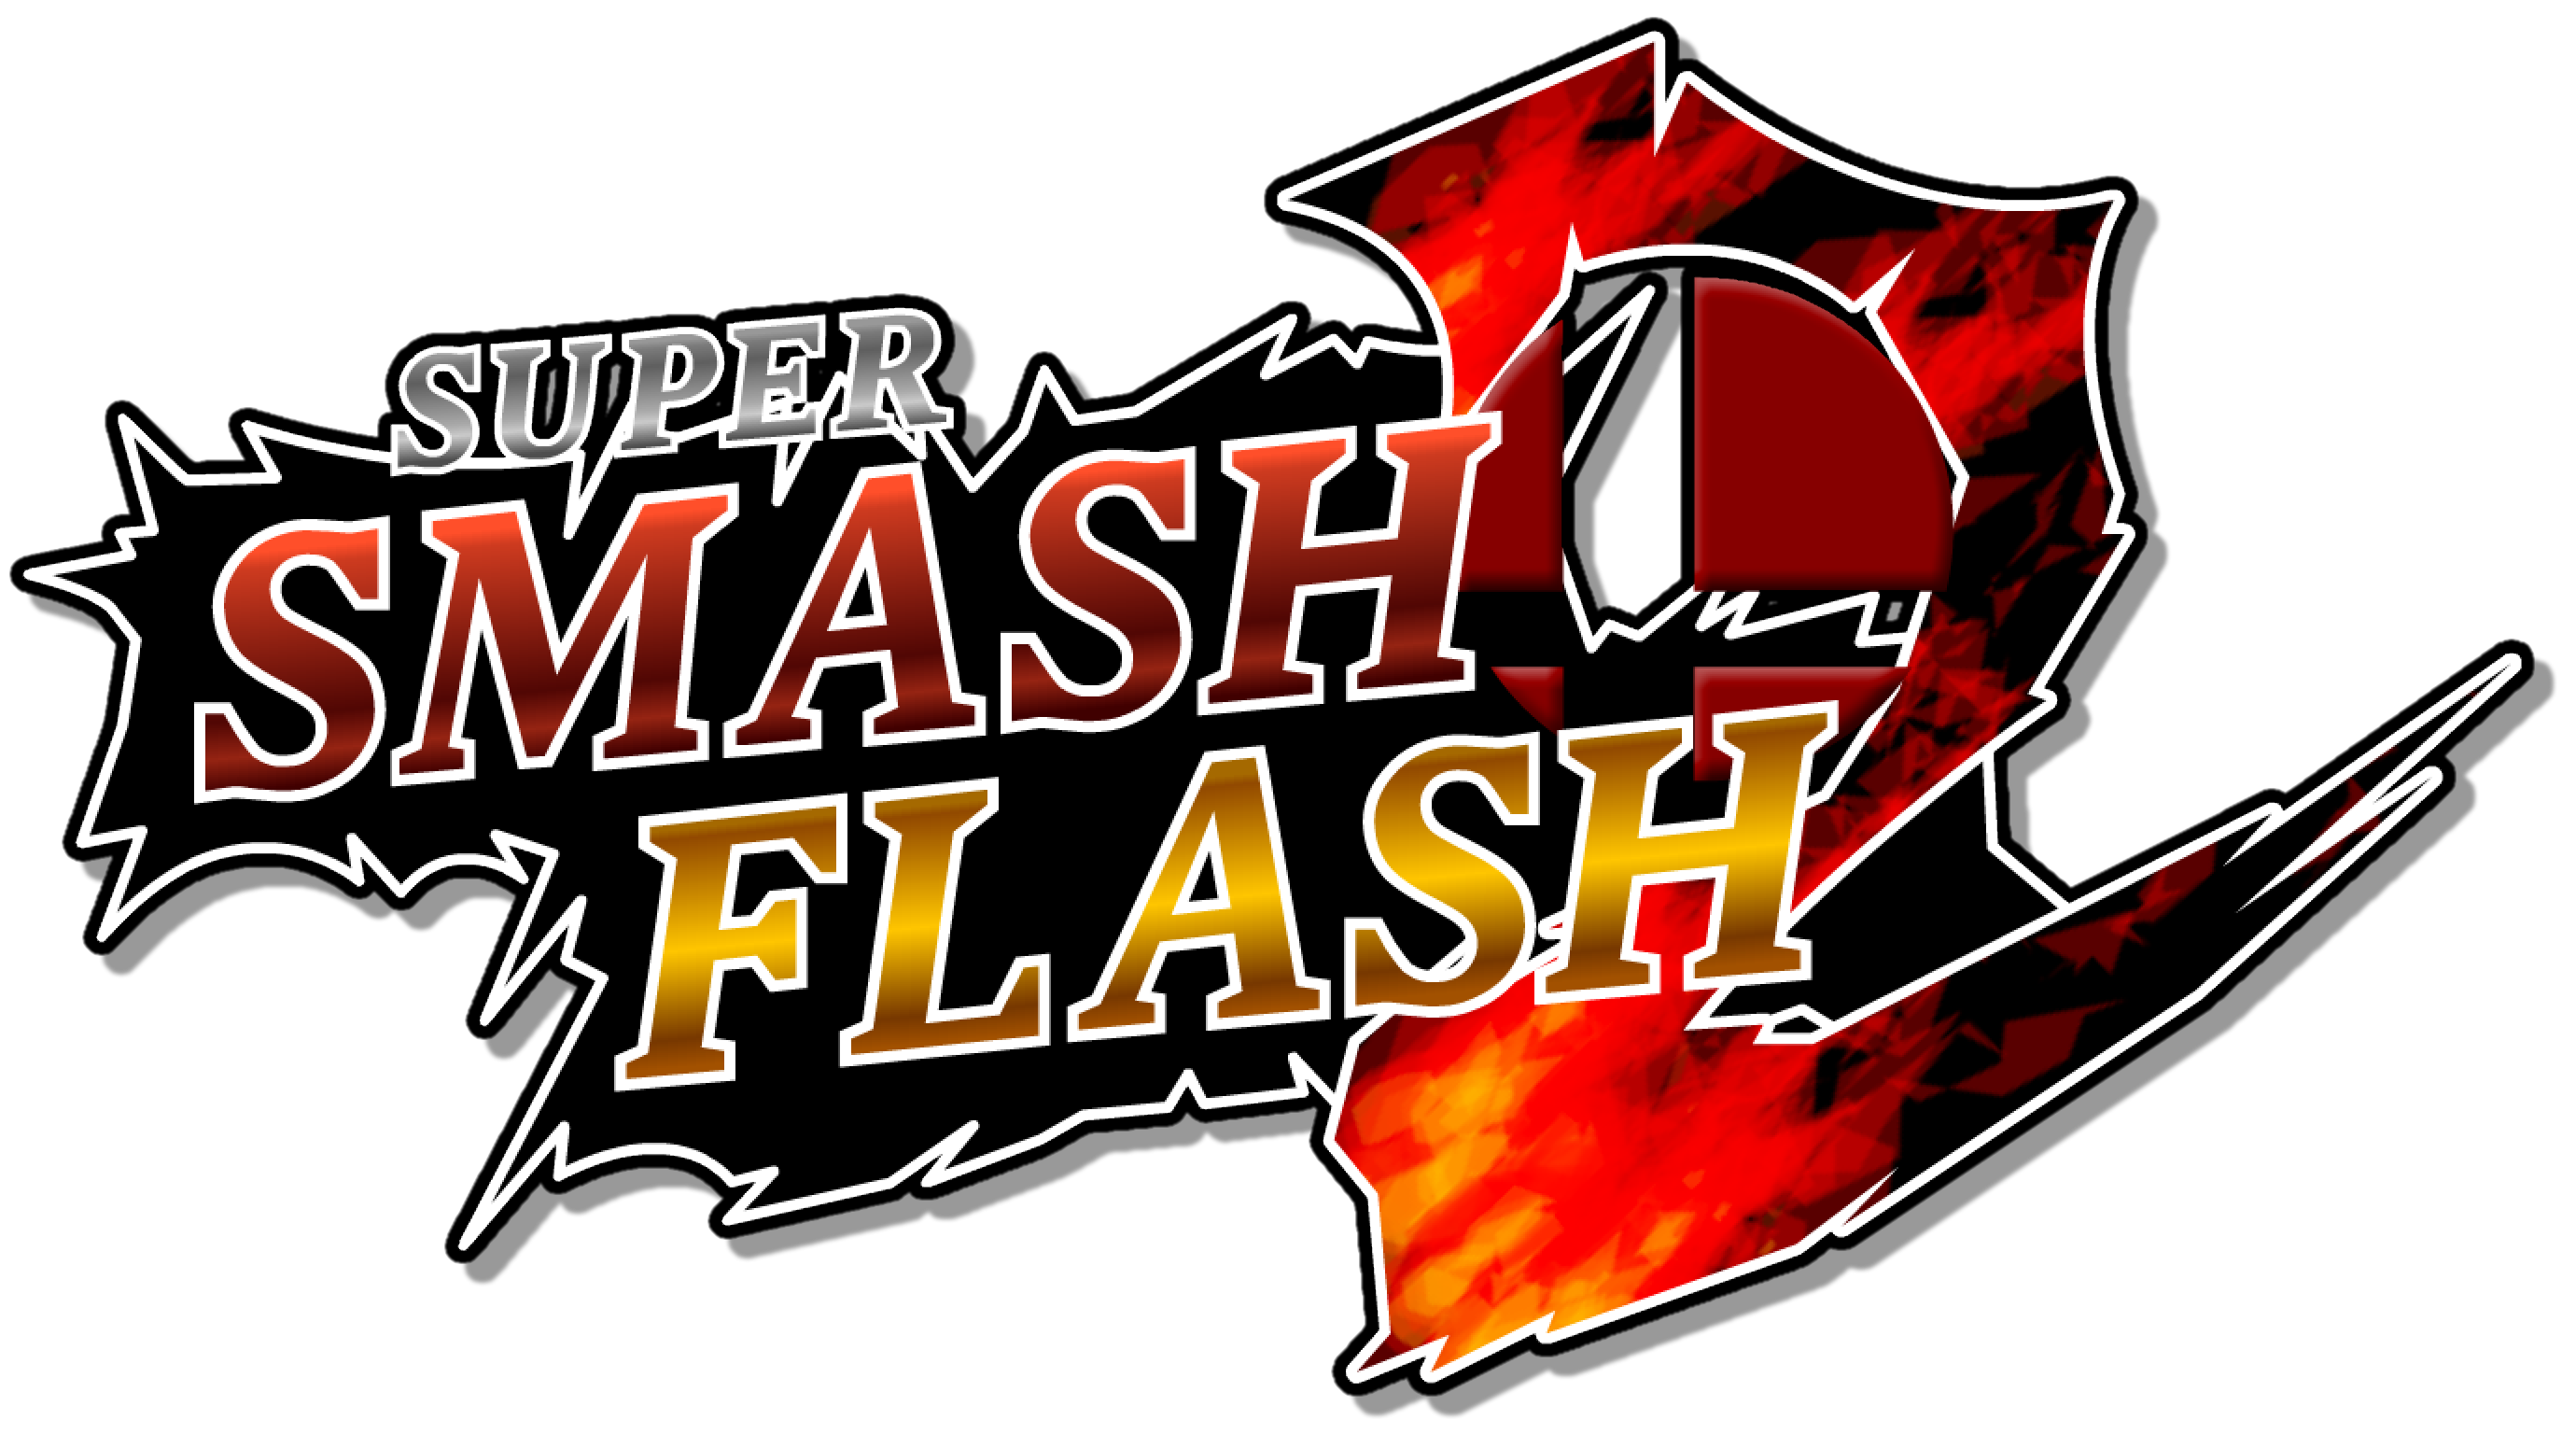 Super Smash Flash 2 Windows, Mac, Linux game - Indie DB